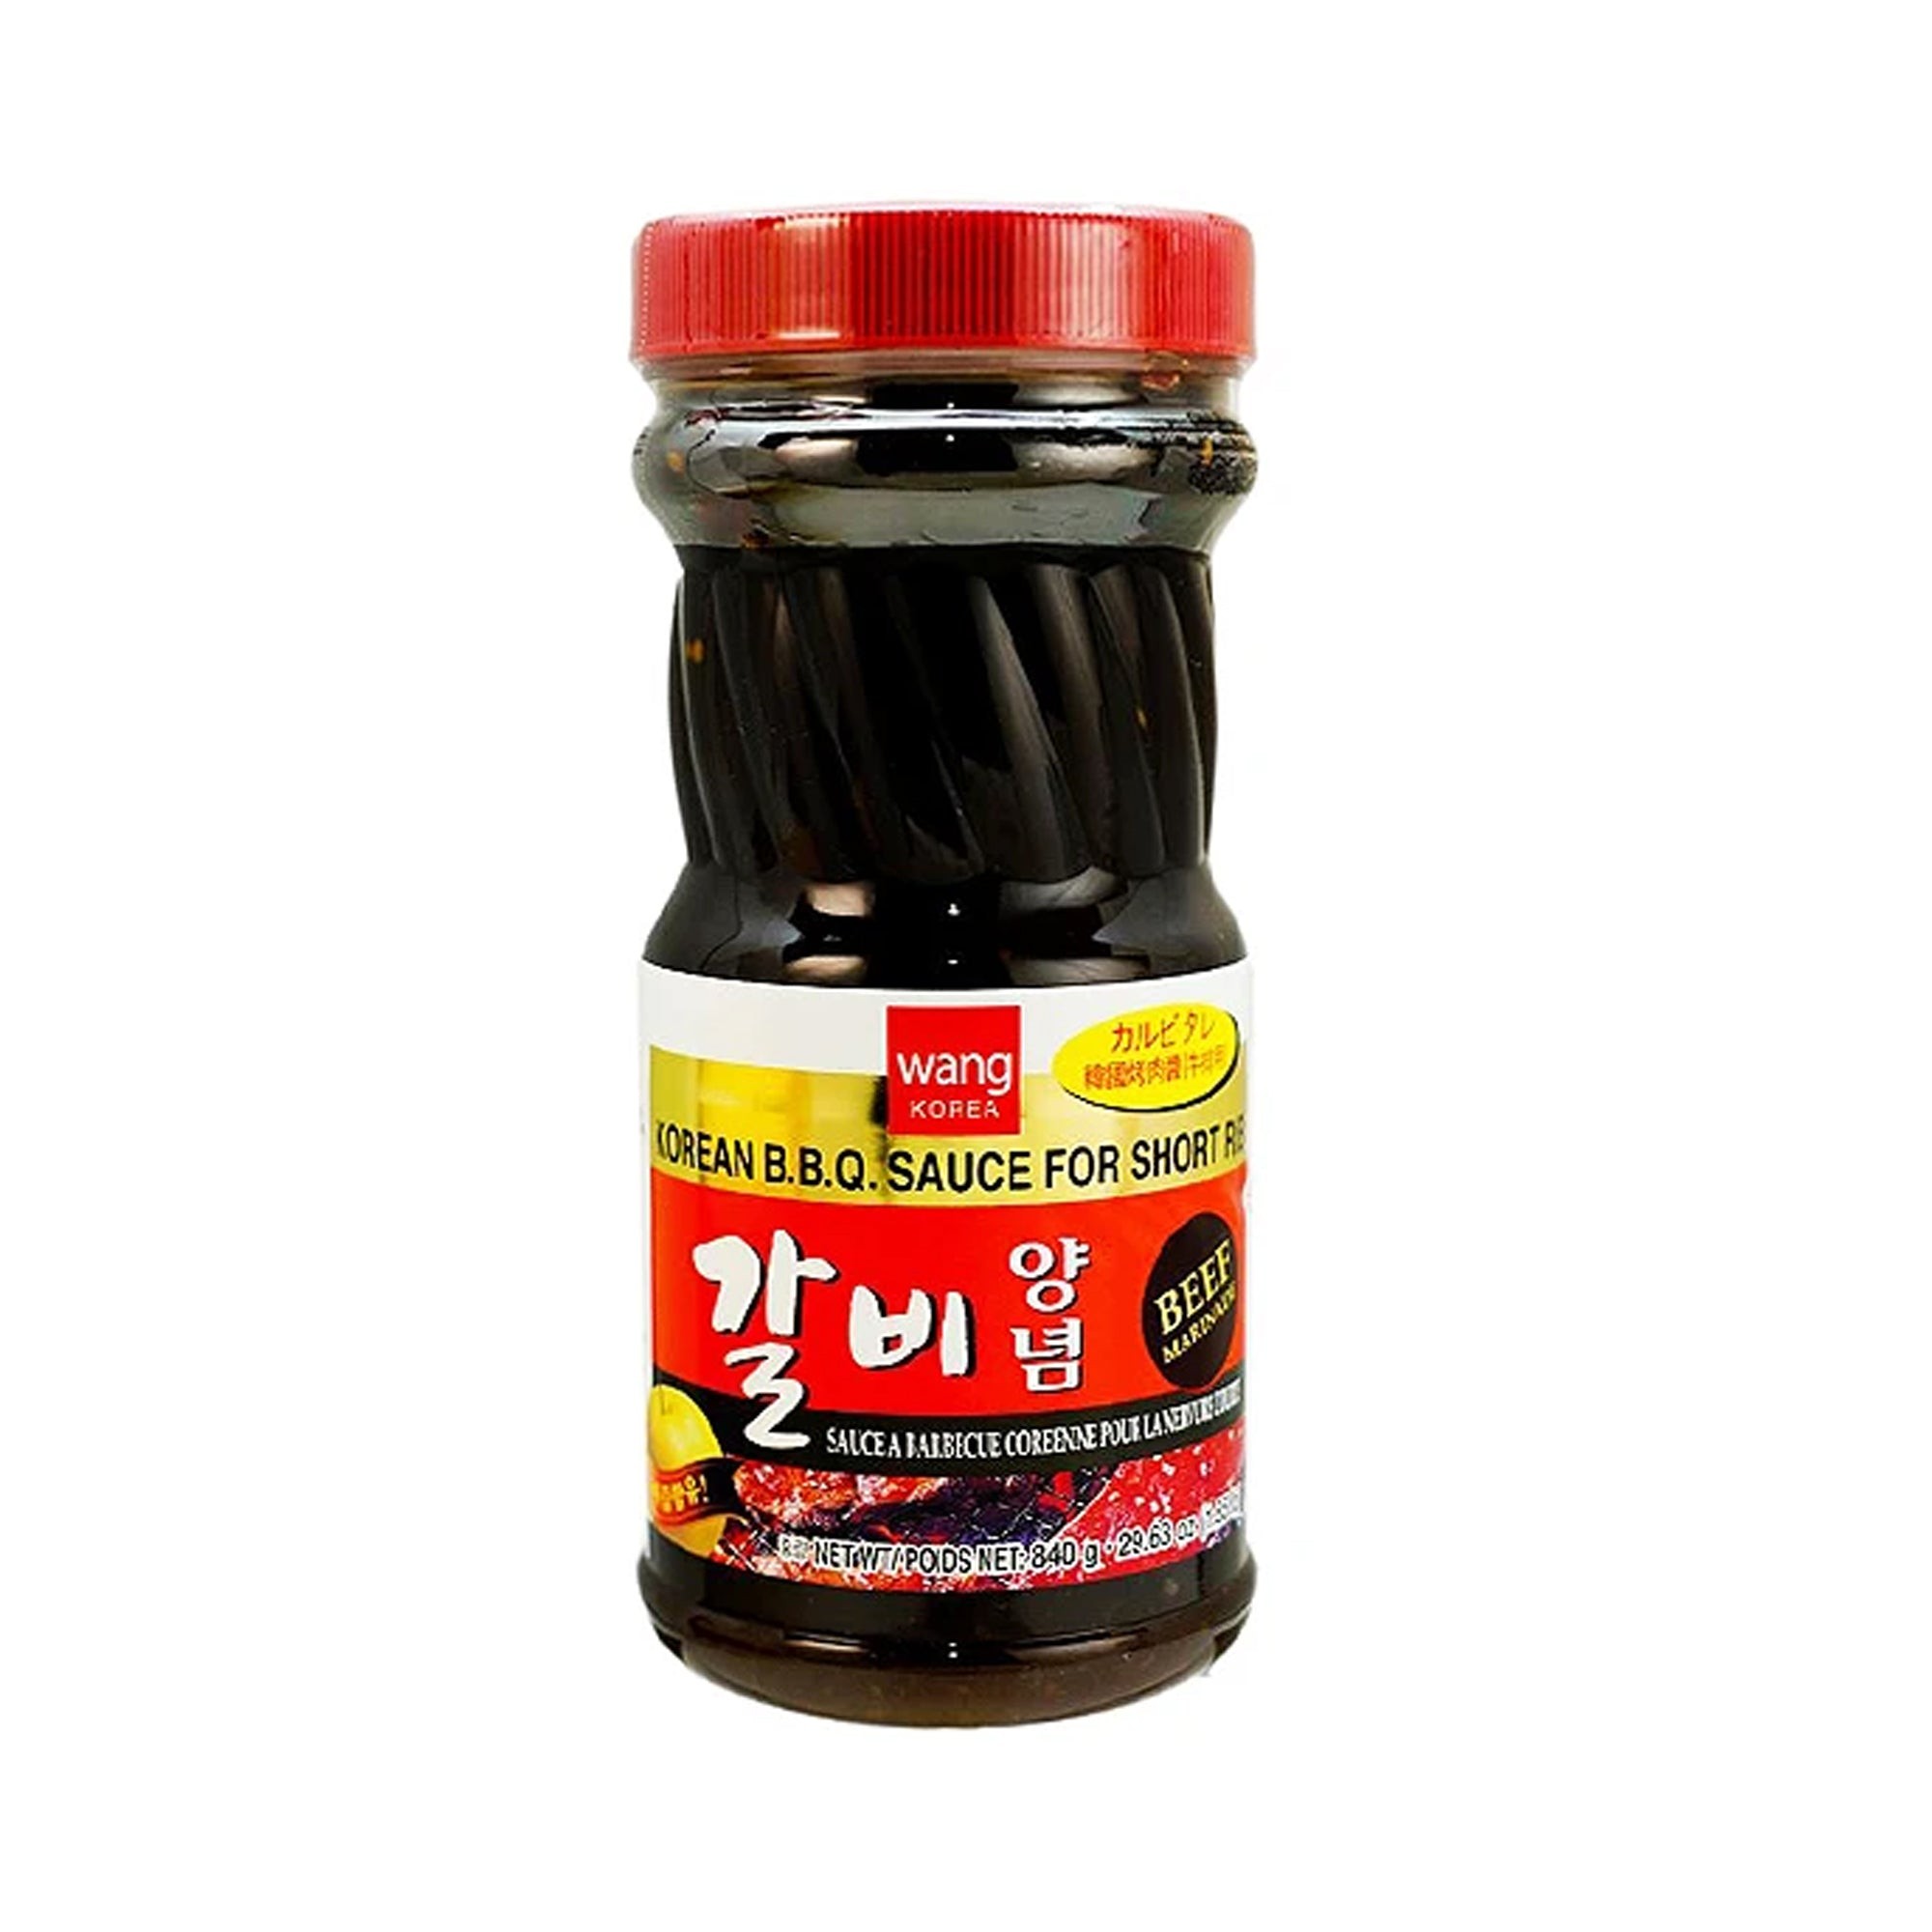 wang-korea-korean-bbq-sauce-for-short-rib